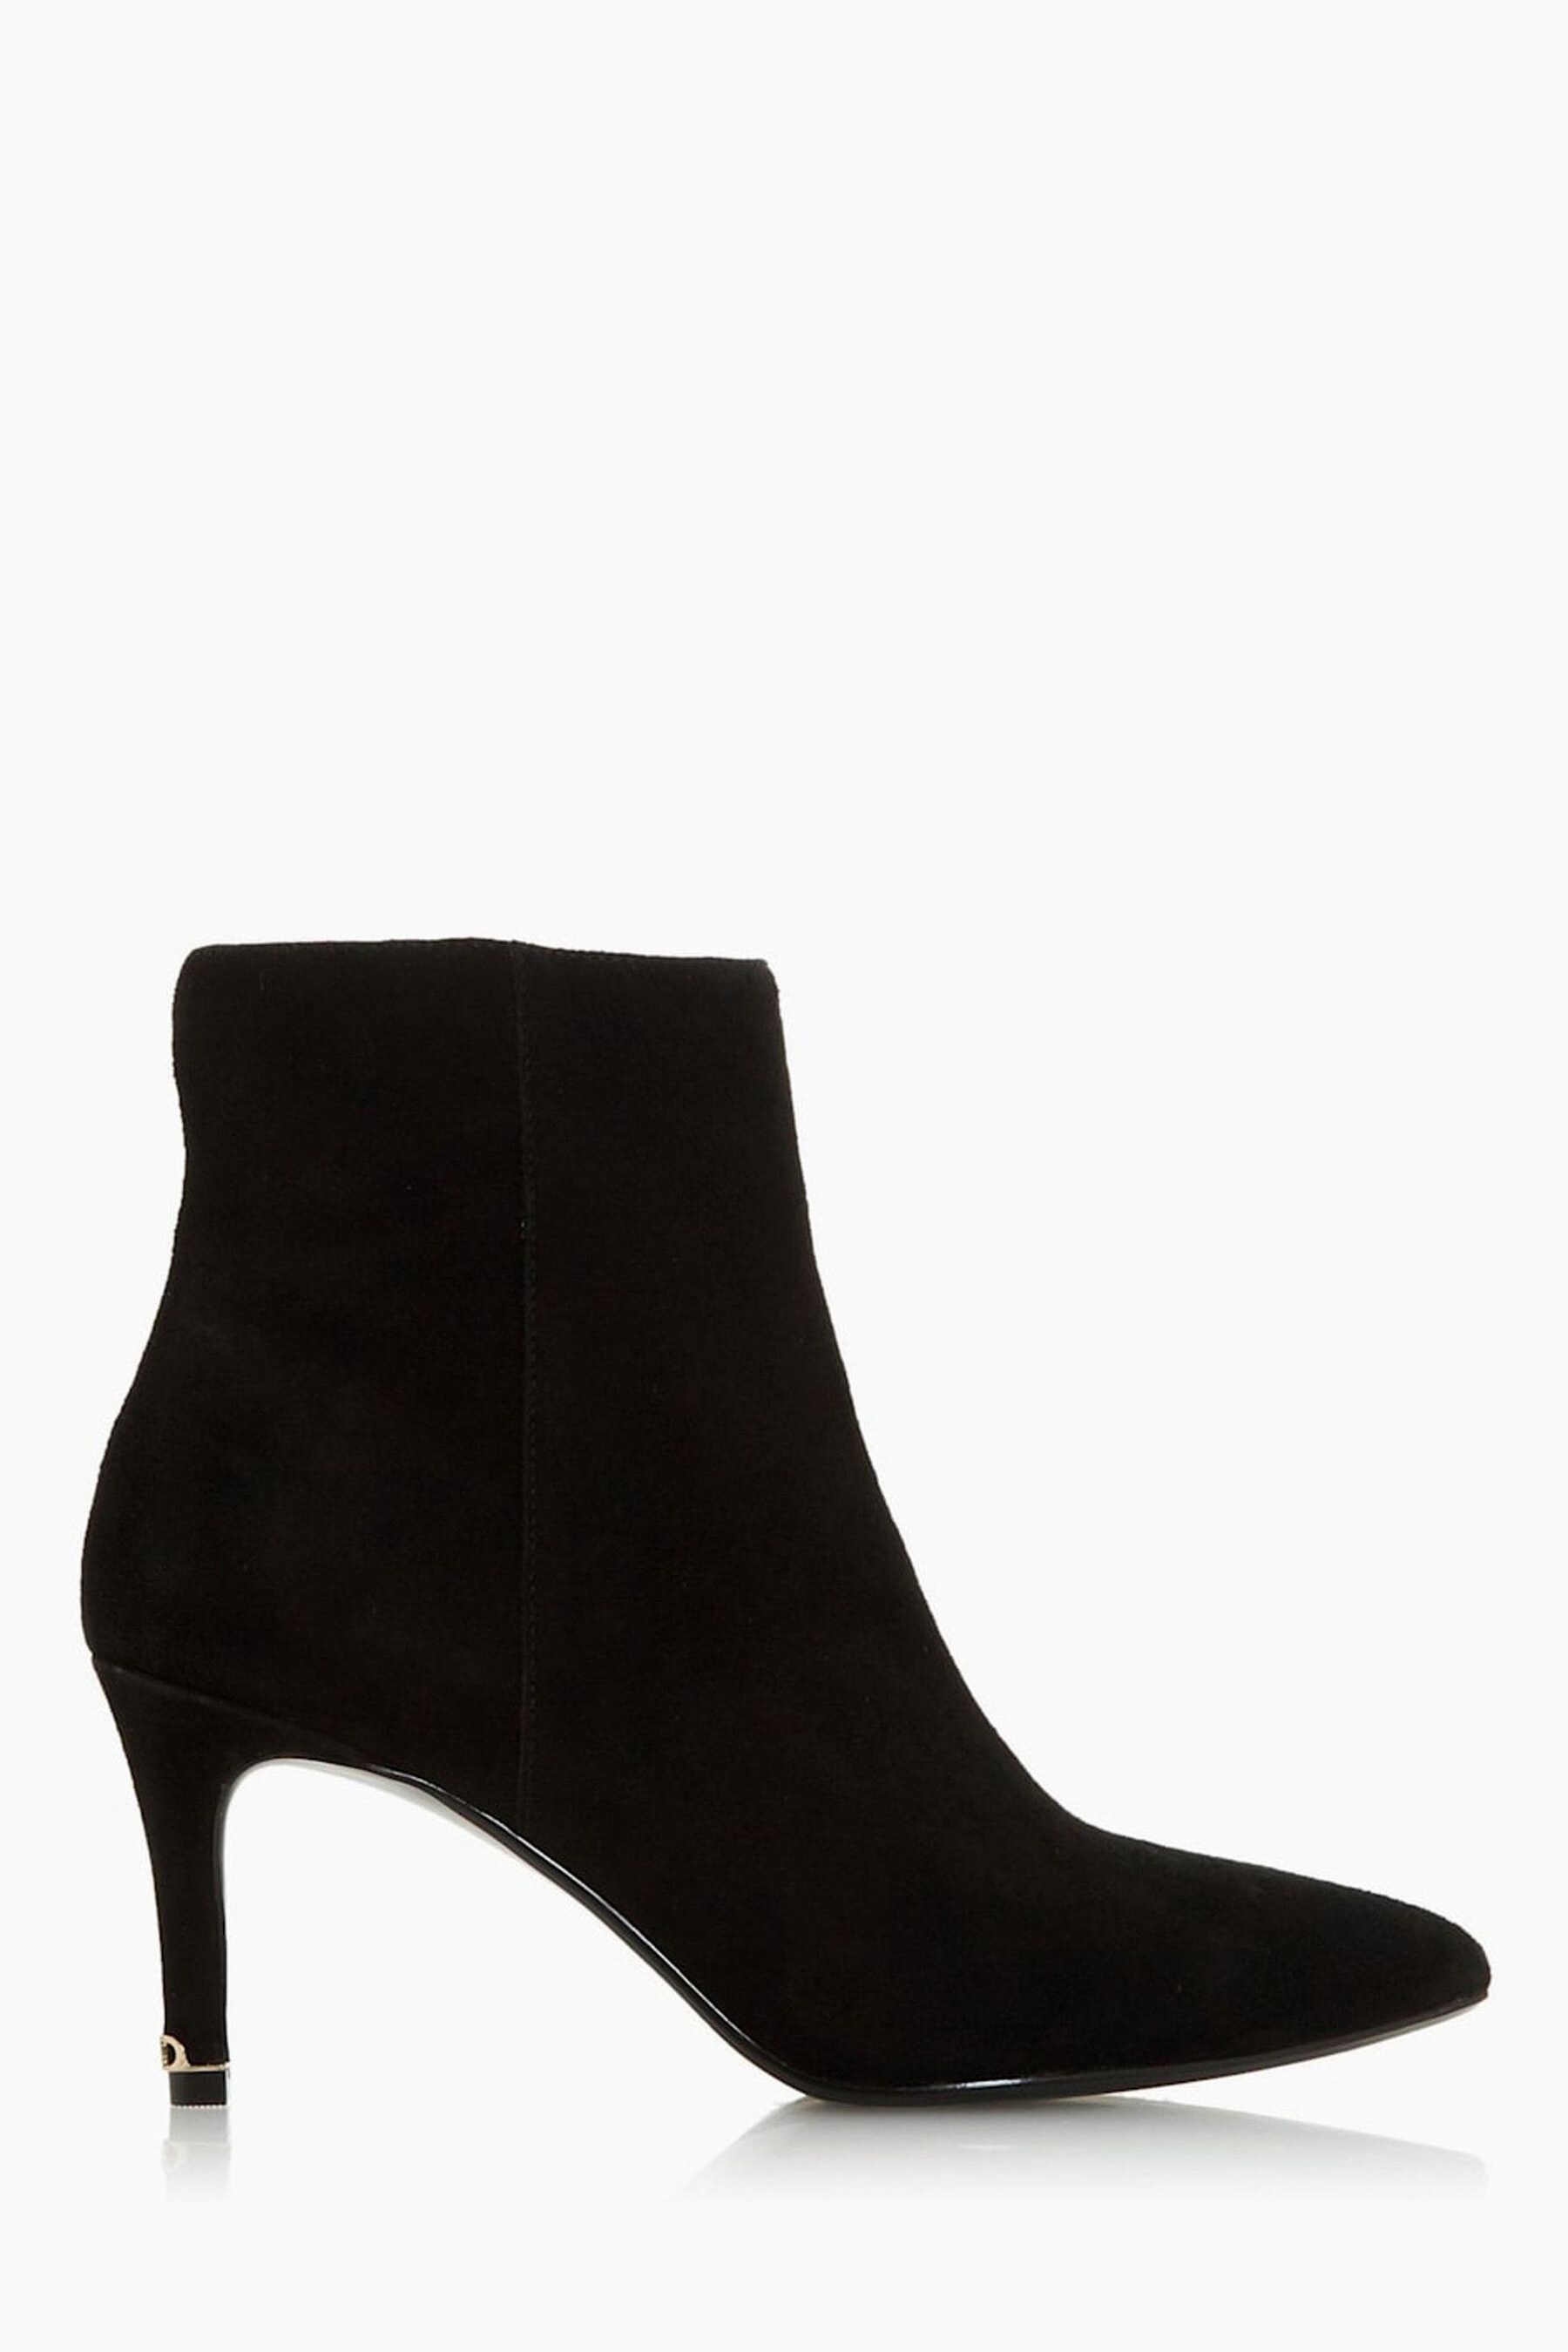 Buy Dune London Black Obsessive Kitten Heel Pointed Toe Ankle Boots ...